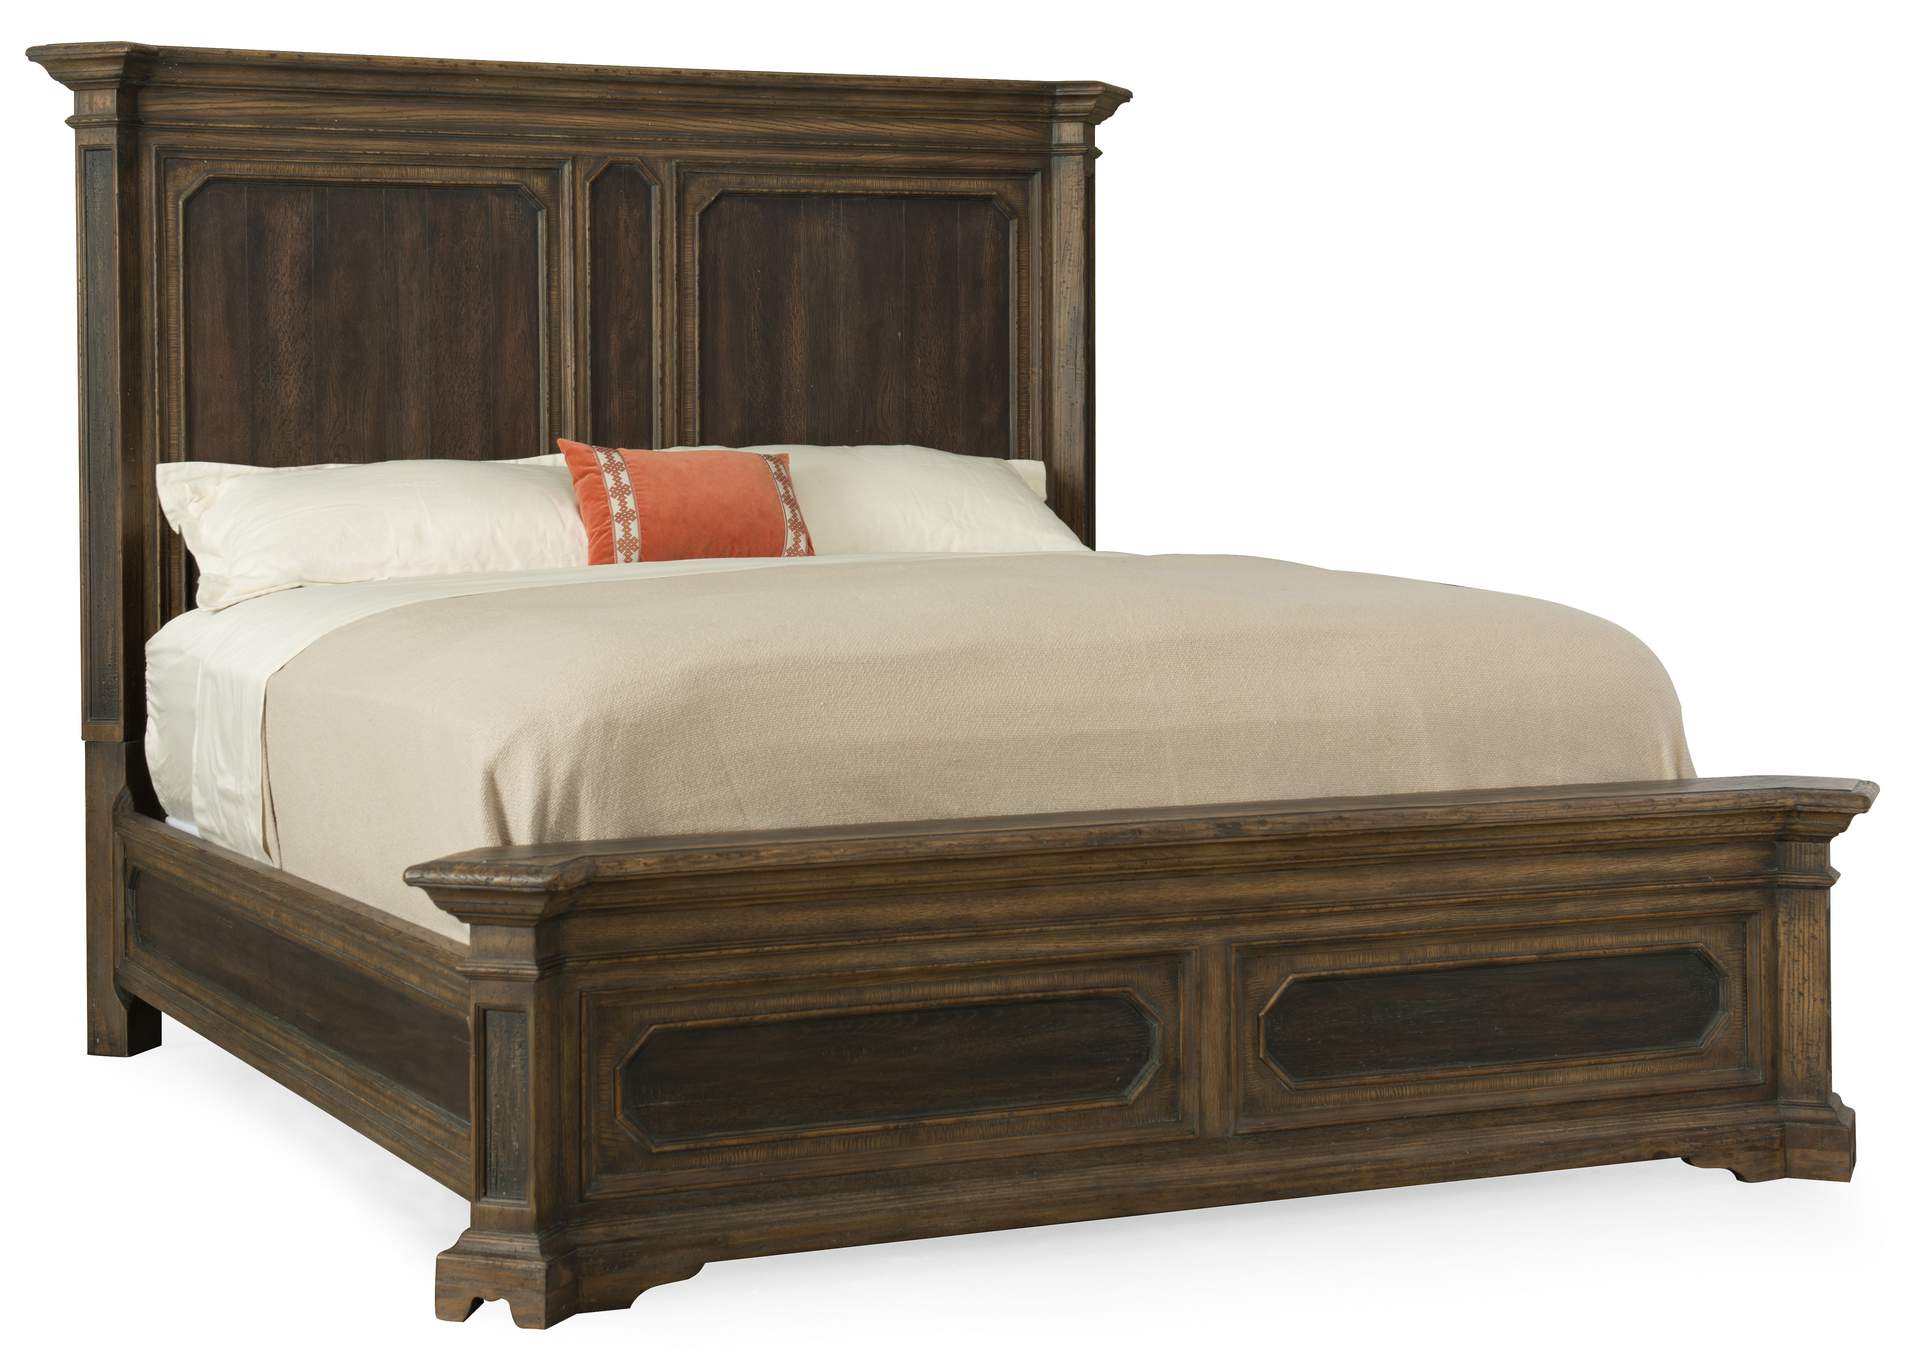 Woodcreek Queen Mansion Bed,Hooker Furniture